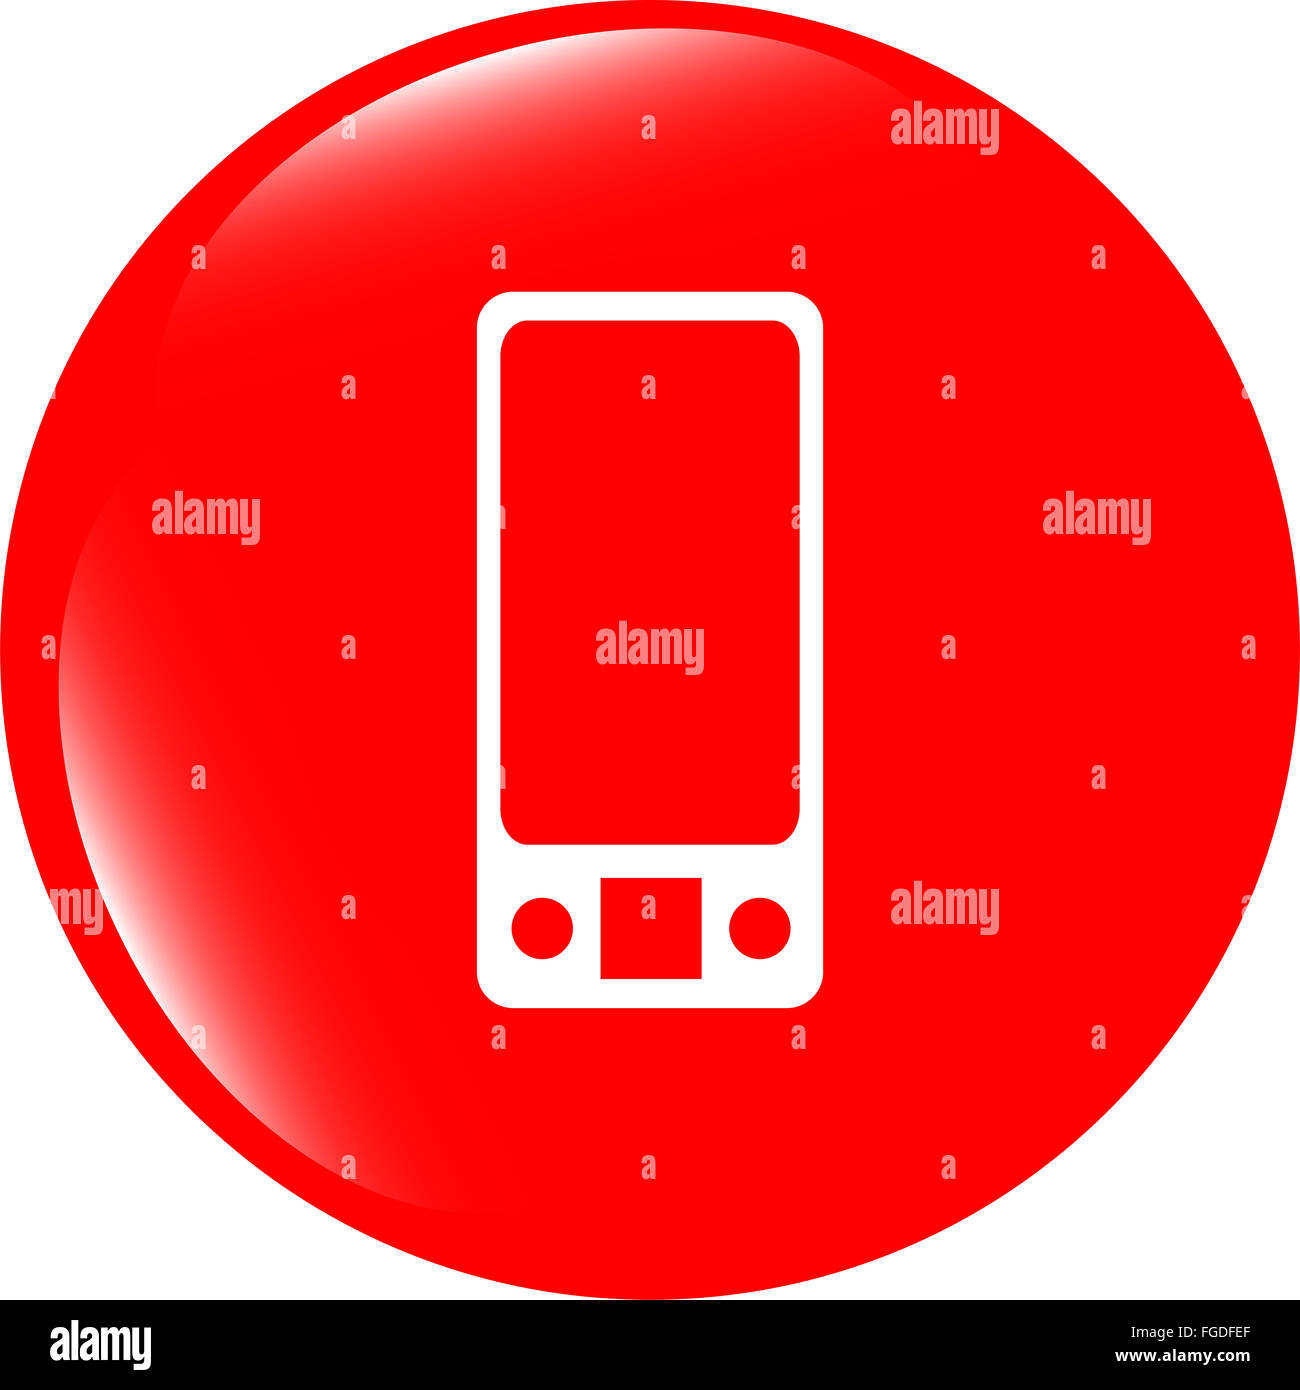 multimedia smart phone icon, button, graphic design element Stock Photo